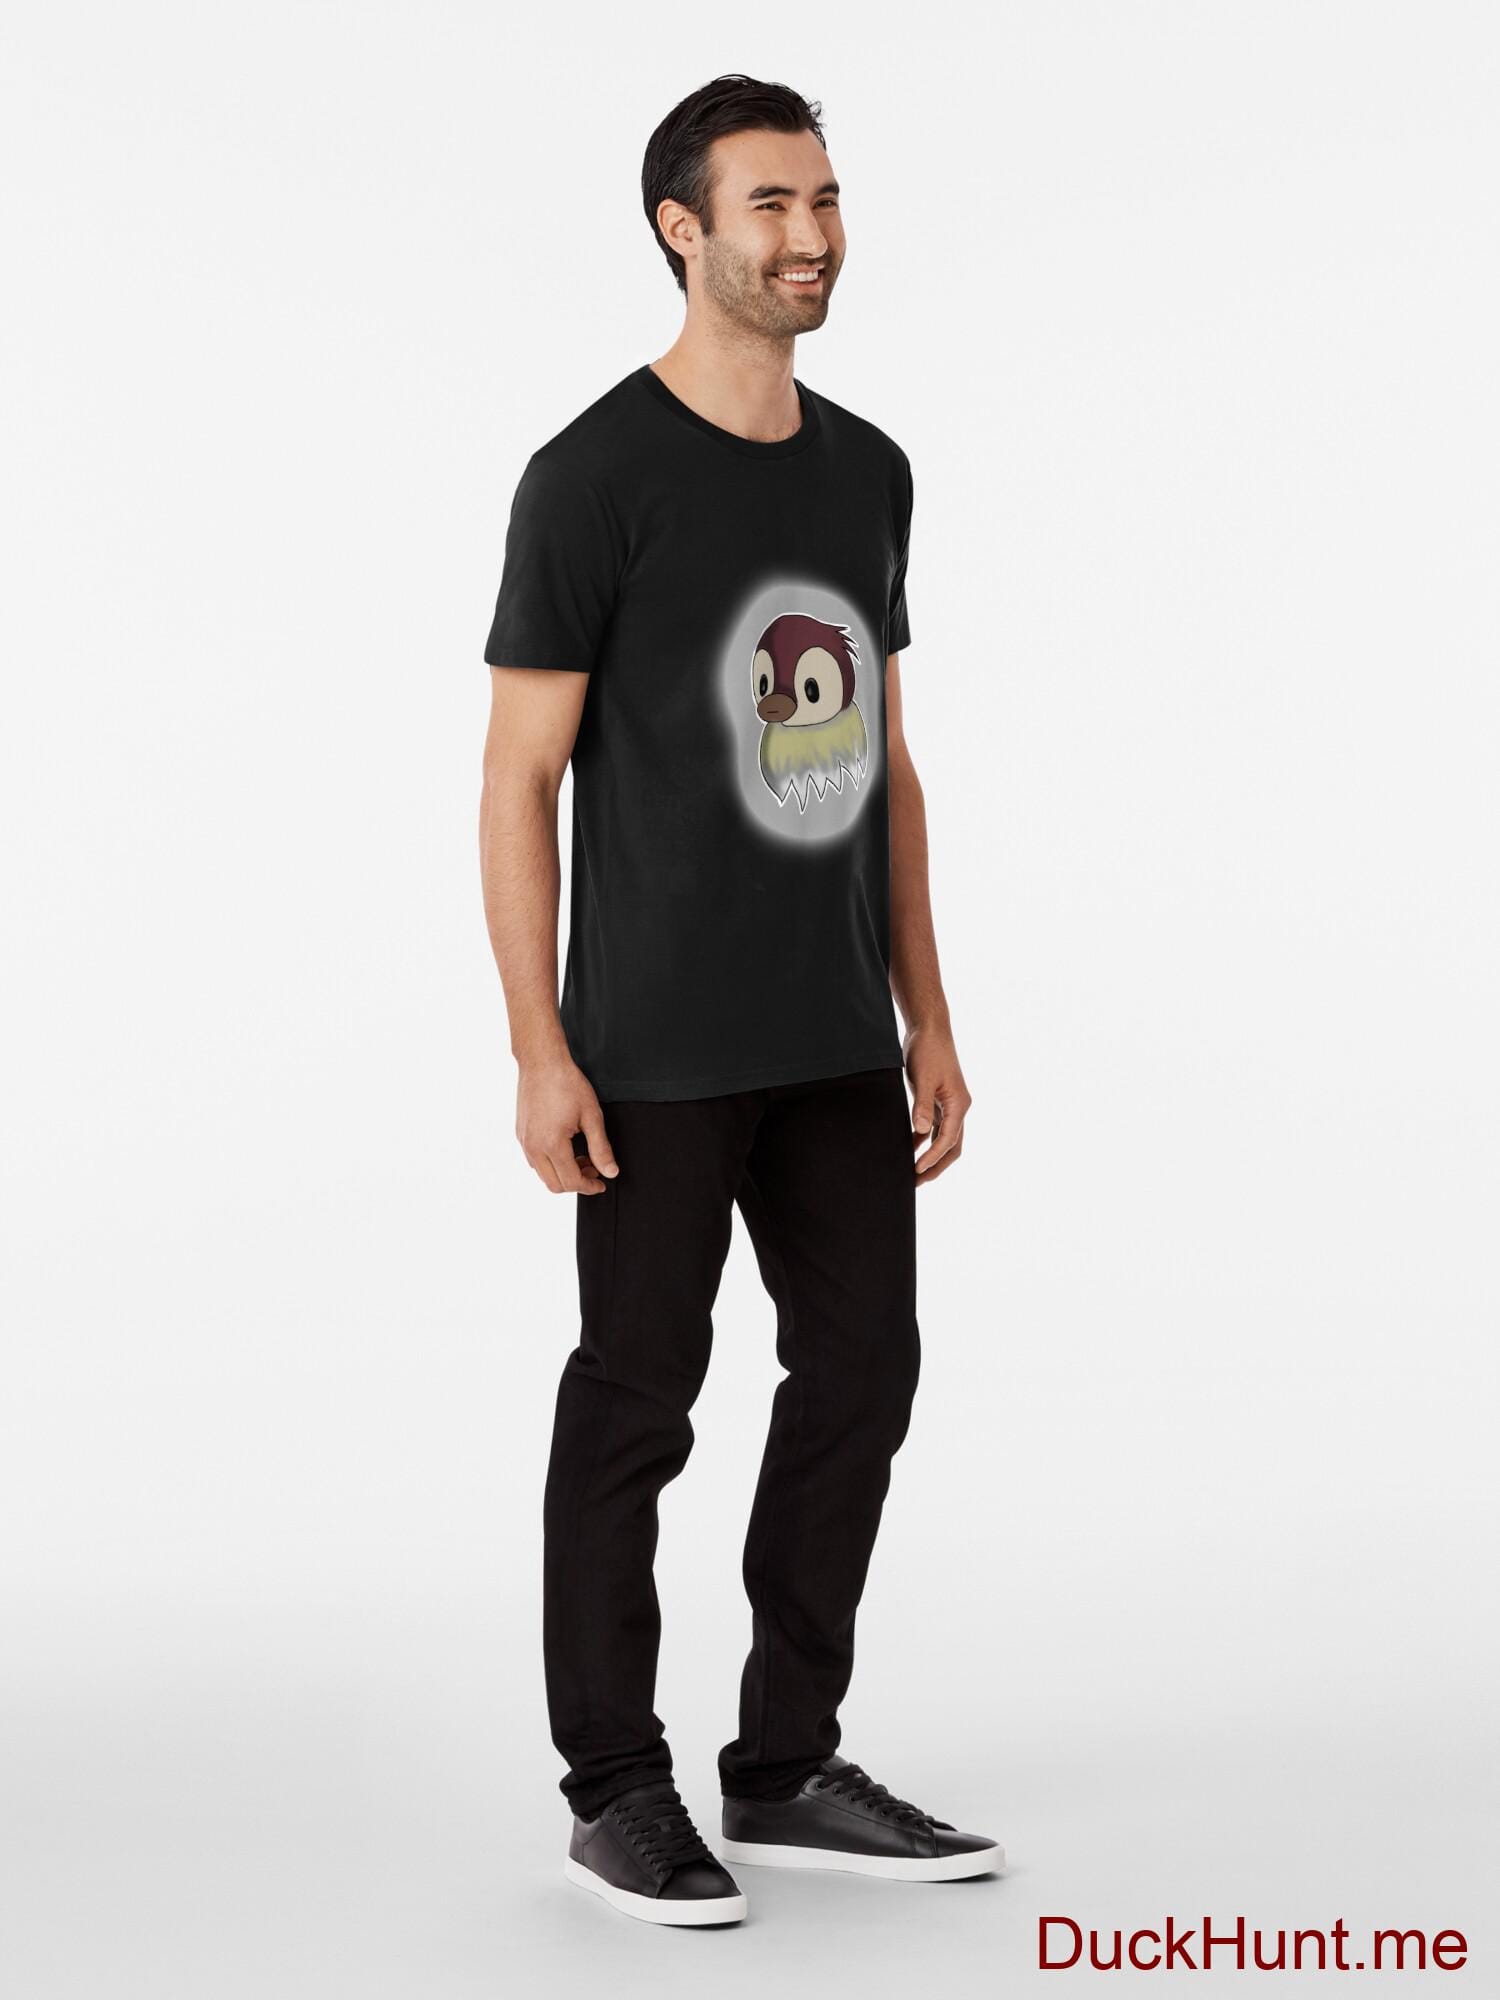 Ghost Duck (foggy) Black Premium T-Shirt (Front printed) alternative image 2